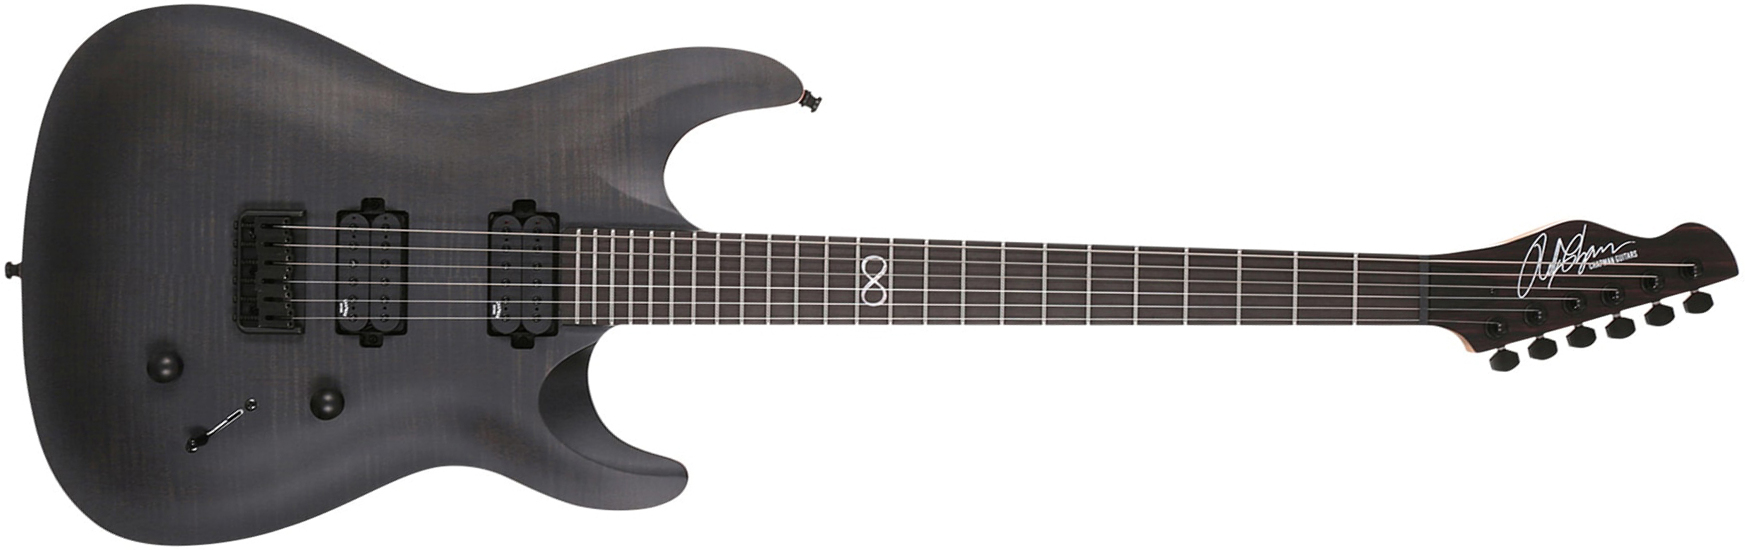 Chapman Guitars Ml1 Pro Modern Hh Ht Eb - Lunar Satin - Str shape electric guitar - Main picture